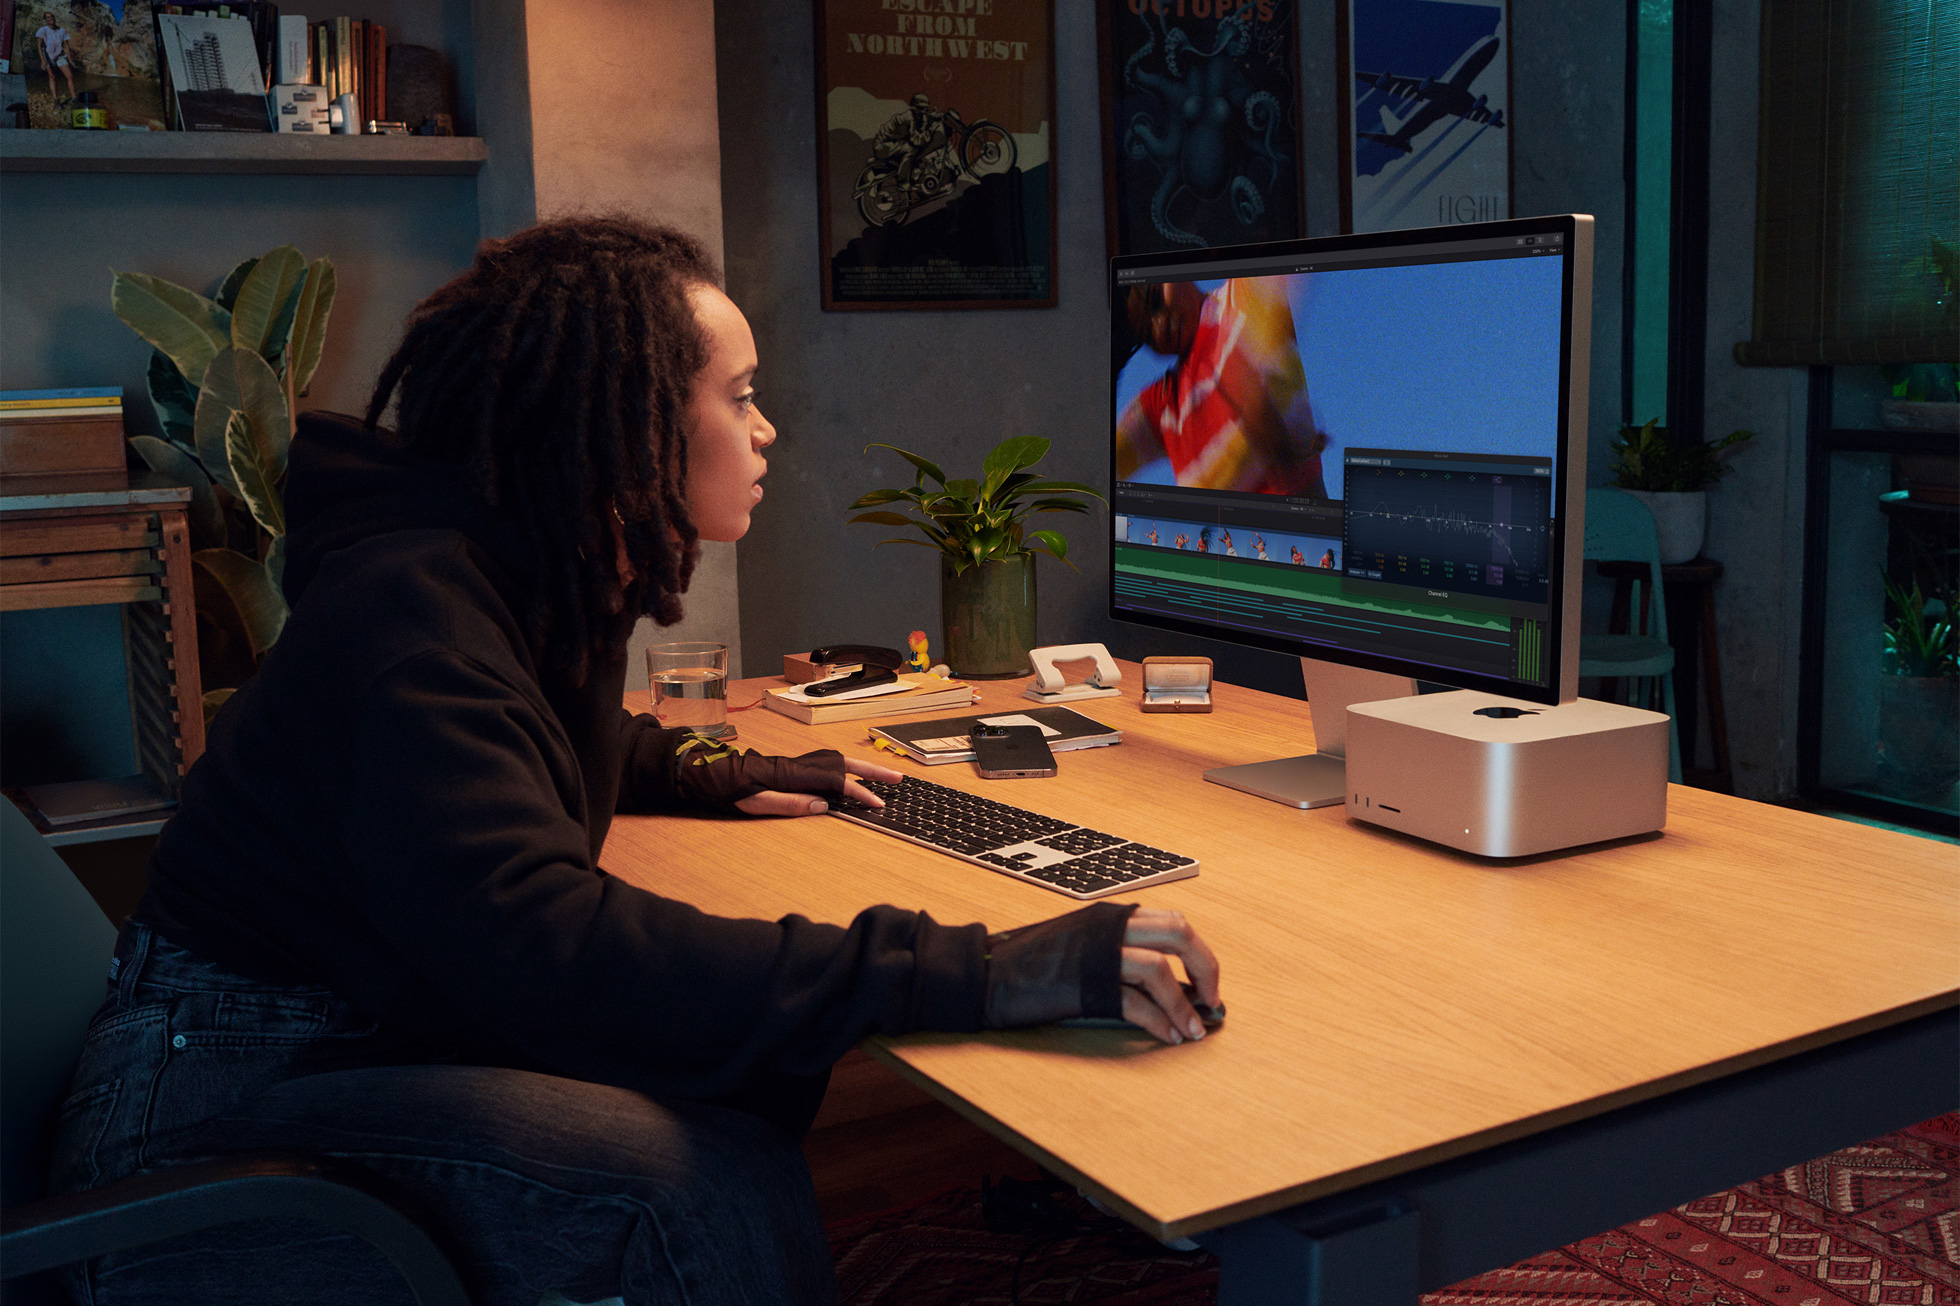 The Apple Studio Display alongside a Mac Studio computer on a desk.